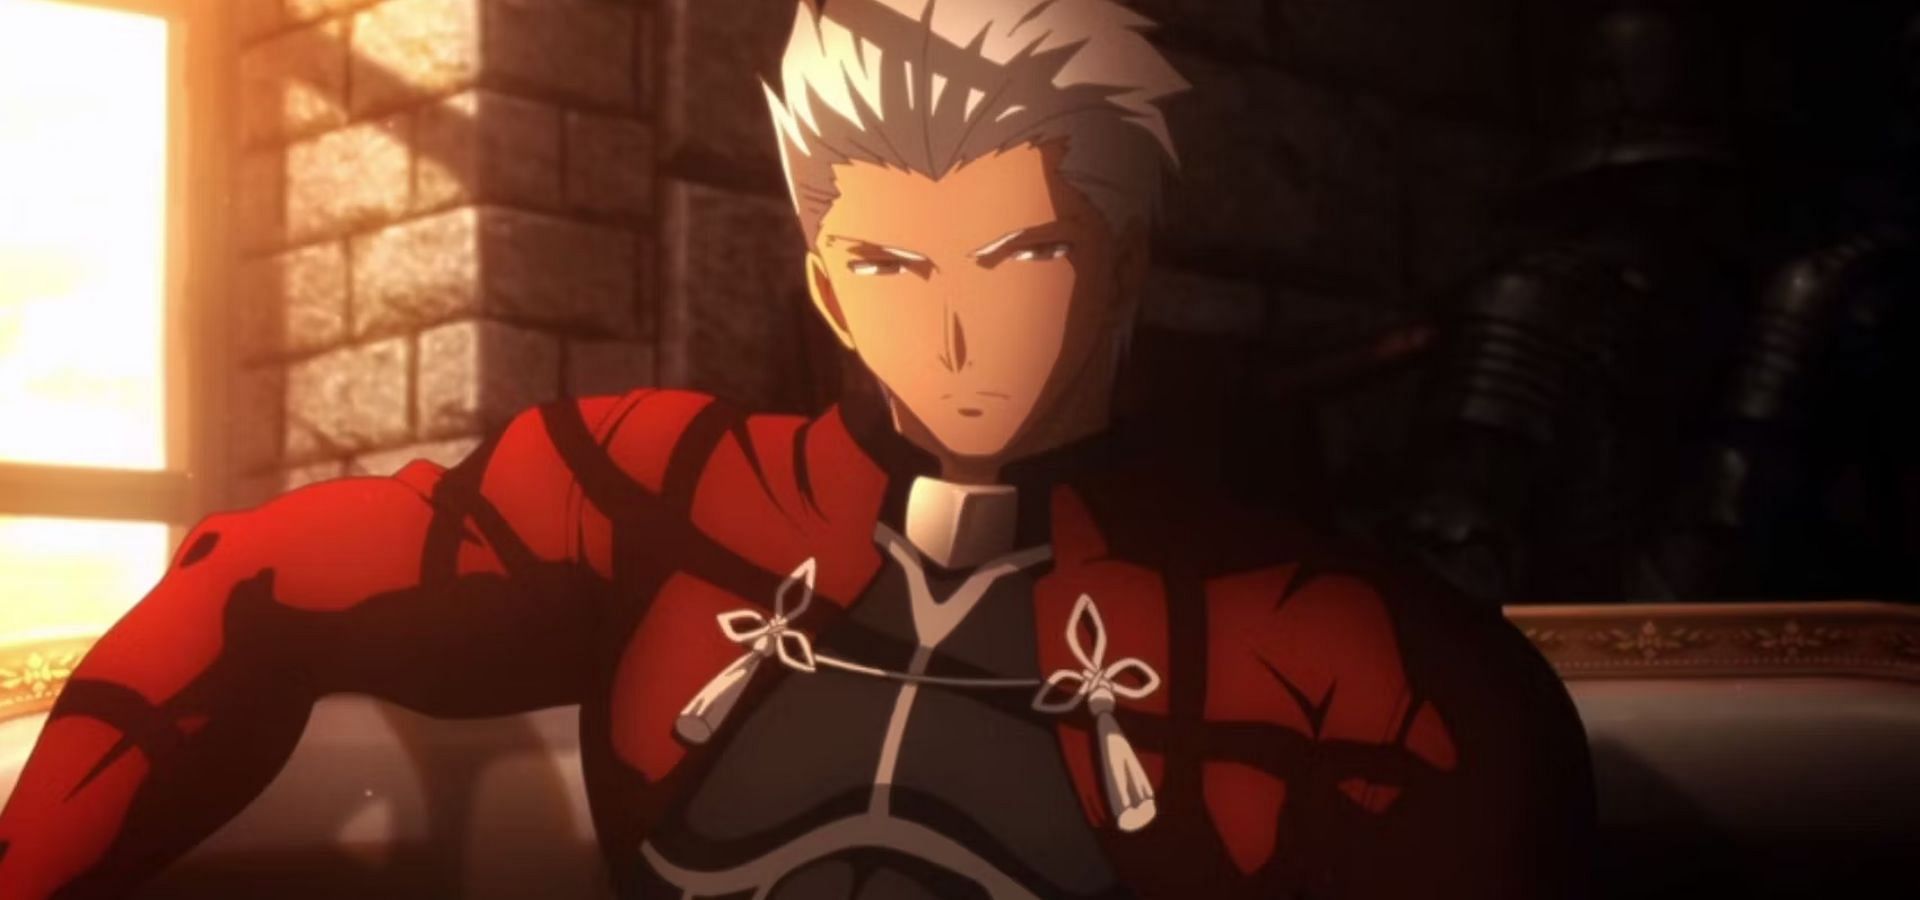 Archer as seen in anime (Image via Ufotable)